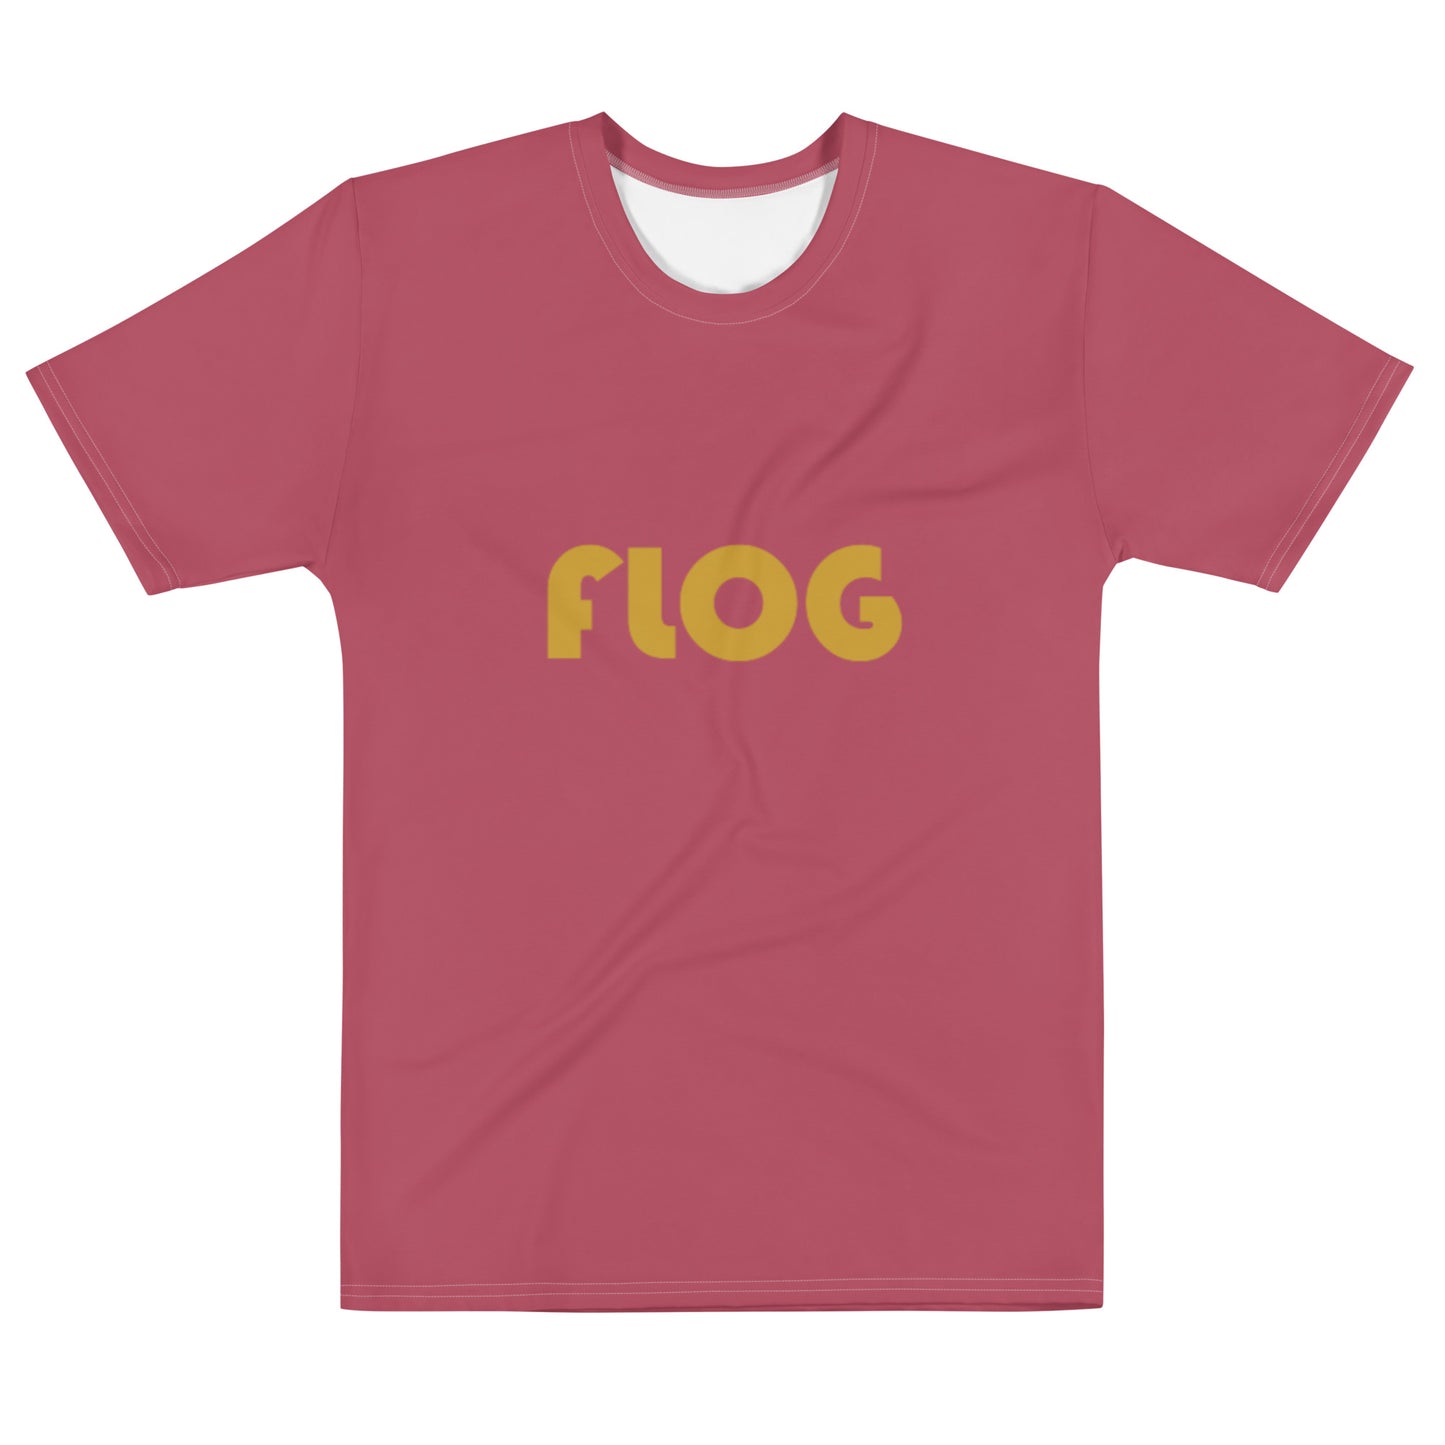 Flog - Sustainably Made Men's Short Sleeve Tee